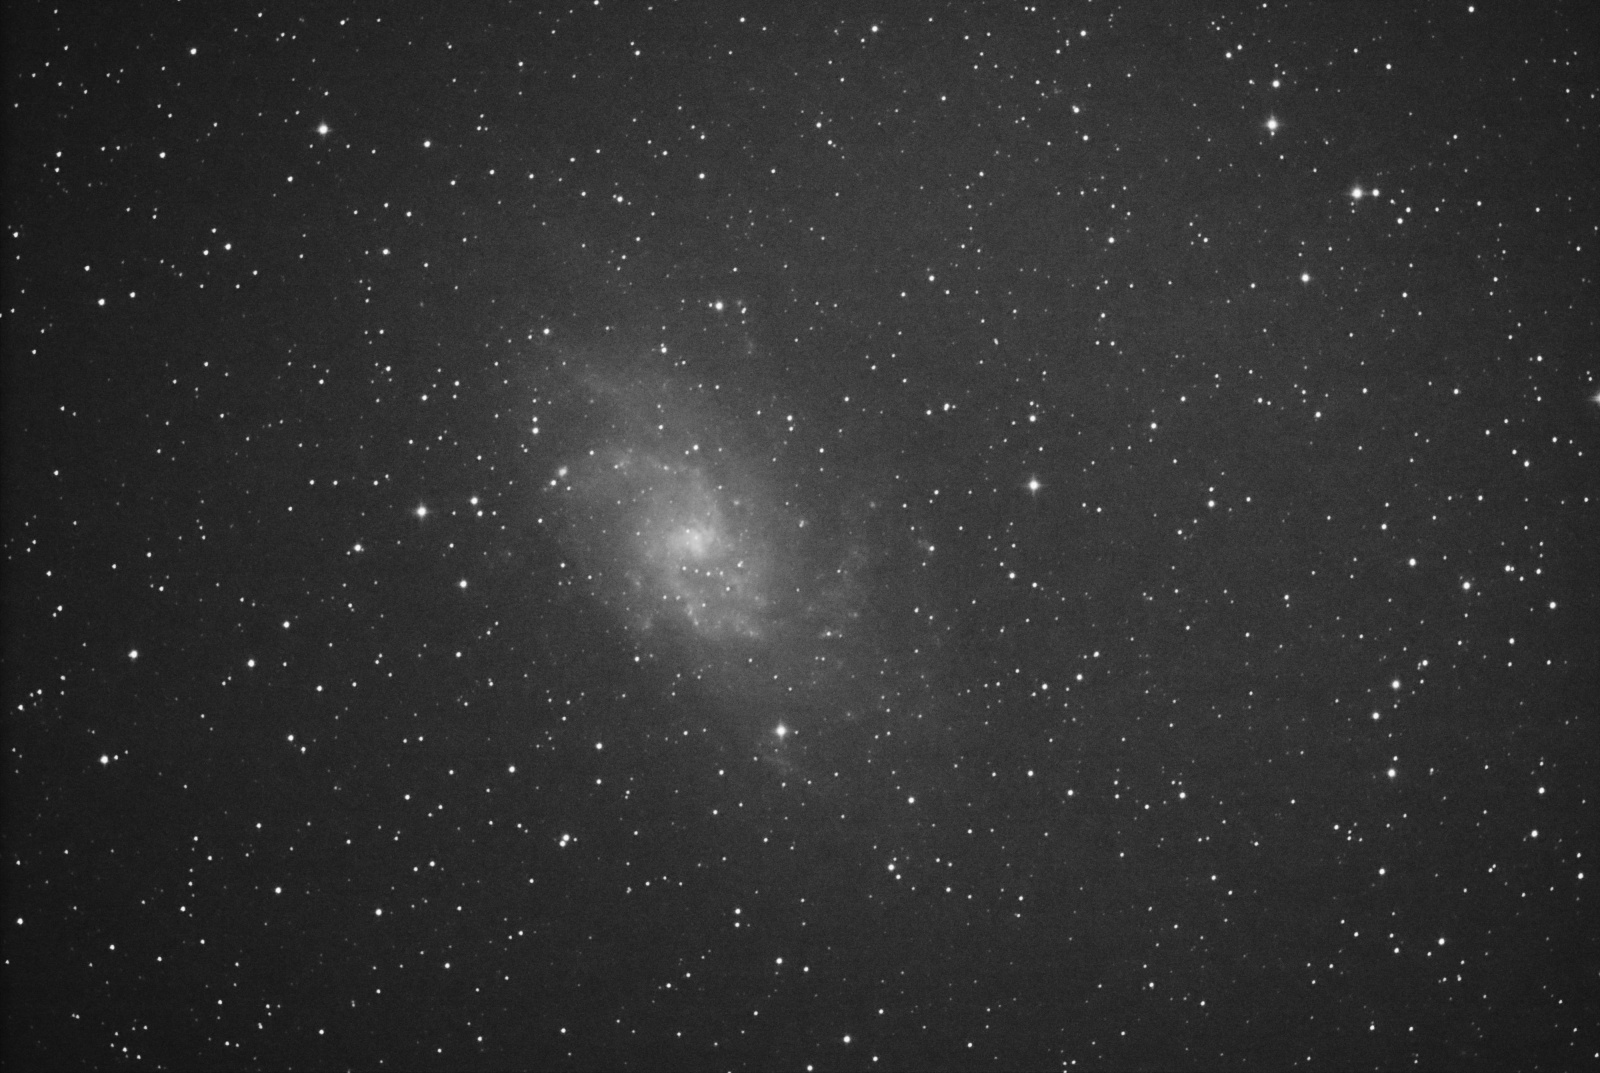 M33 12x15s.jpg